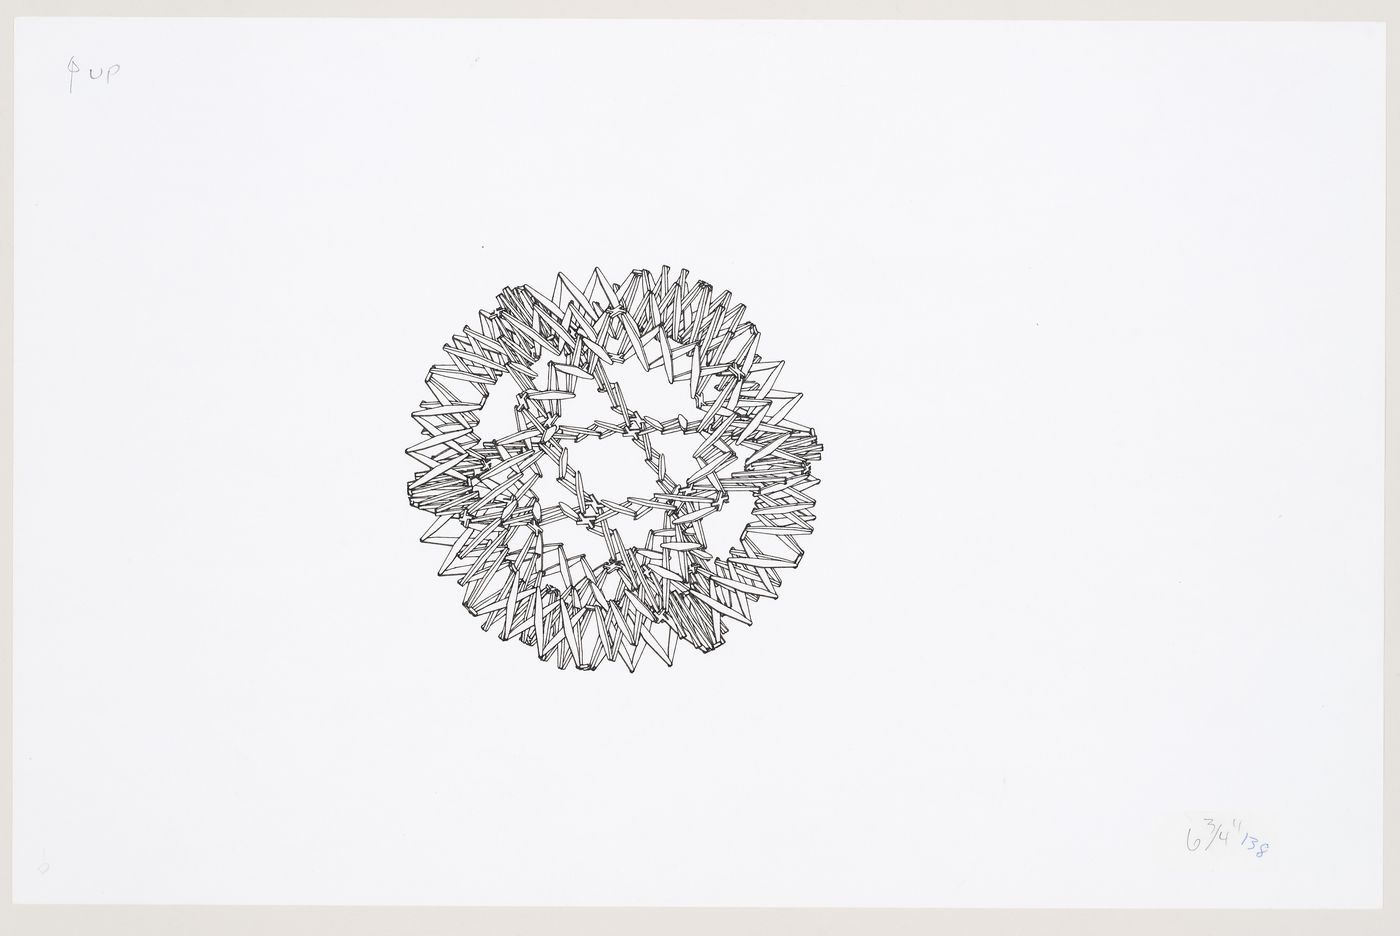 Drawing of Hoberman Sphere in expanding position